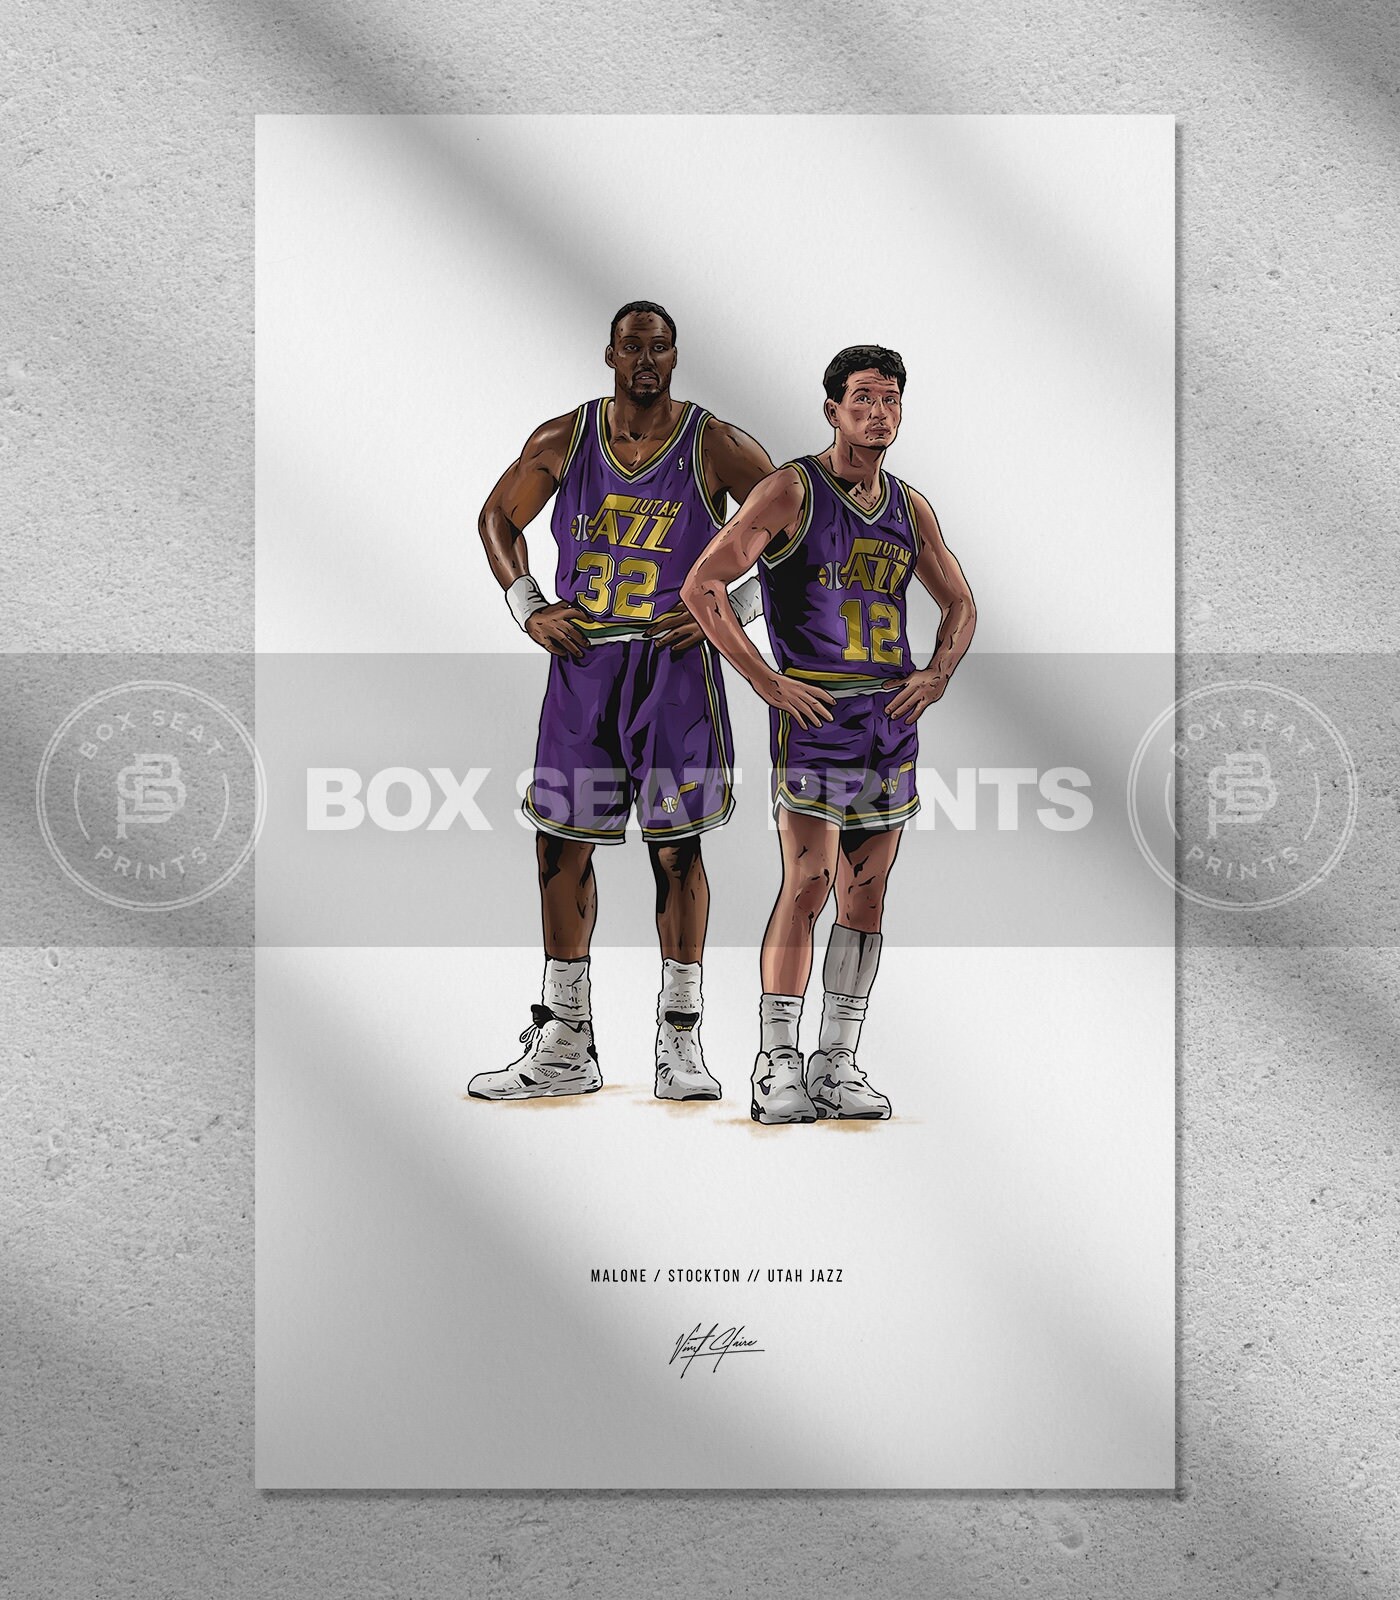 KARL MALONE JOHN STOCKTON UTAH JAZZ 8x10 PHOTO BASKETBALL NBA HOF